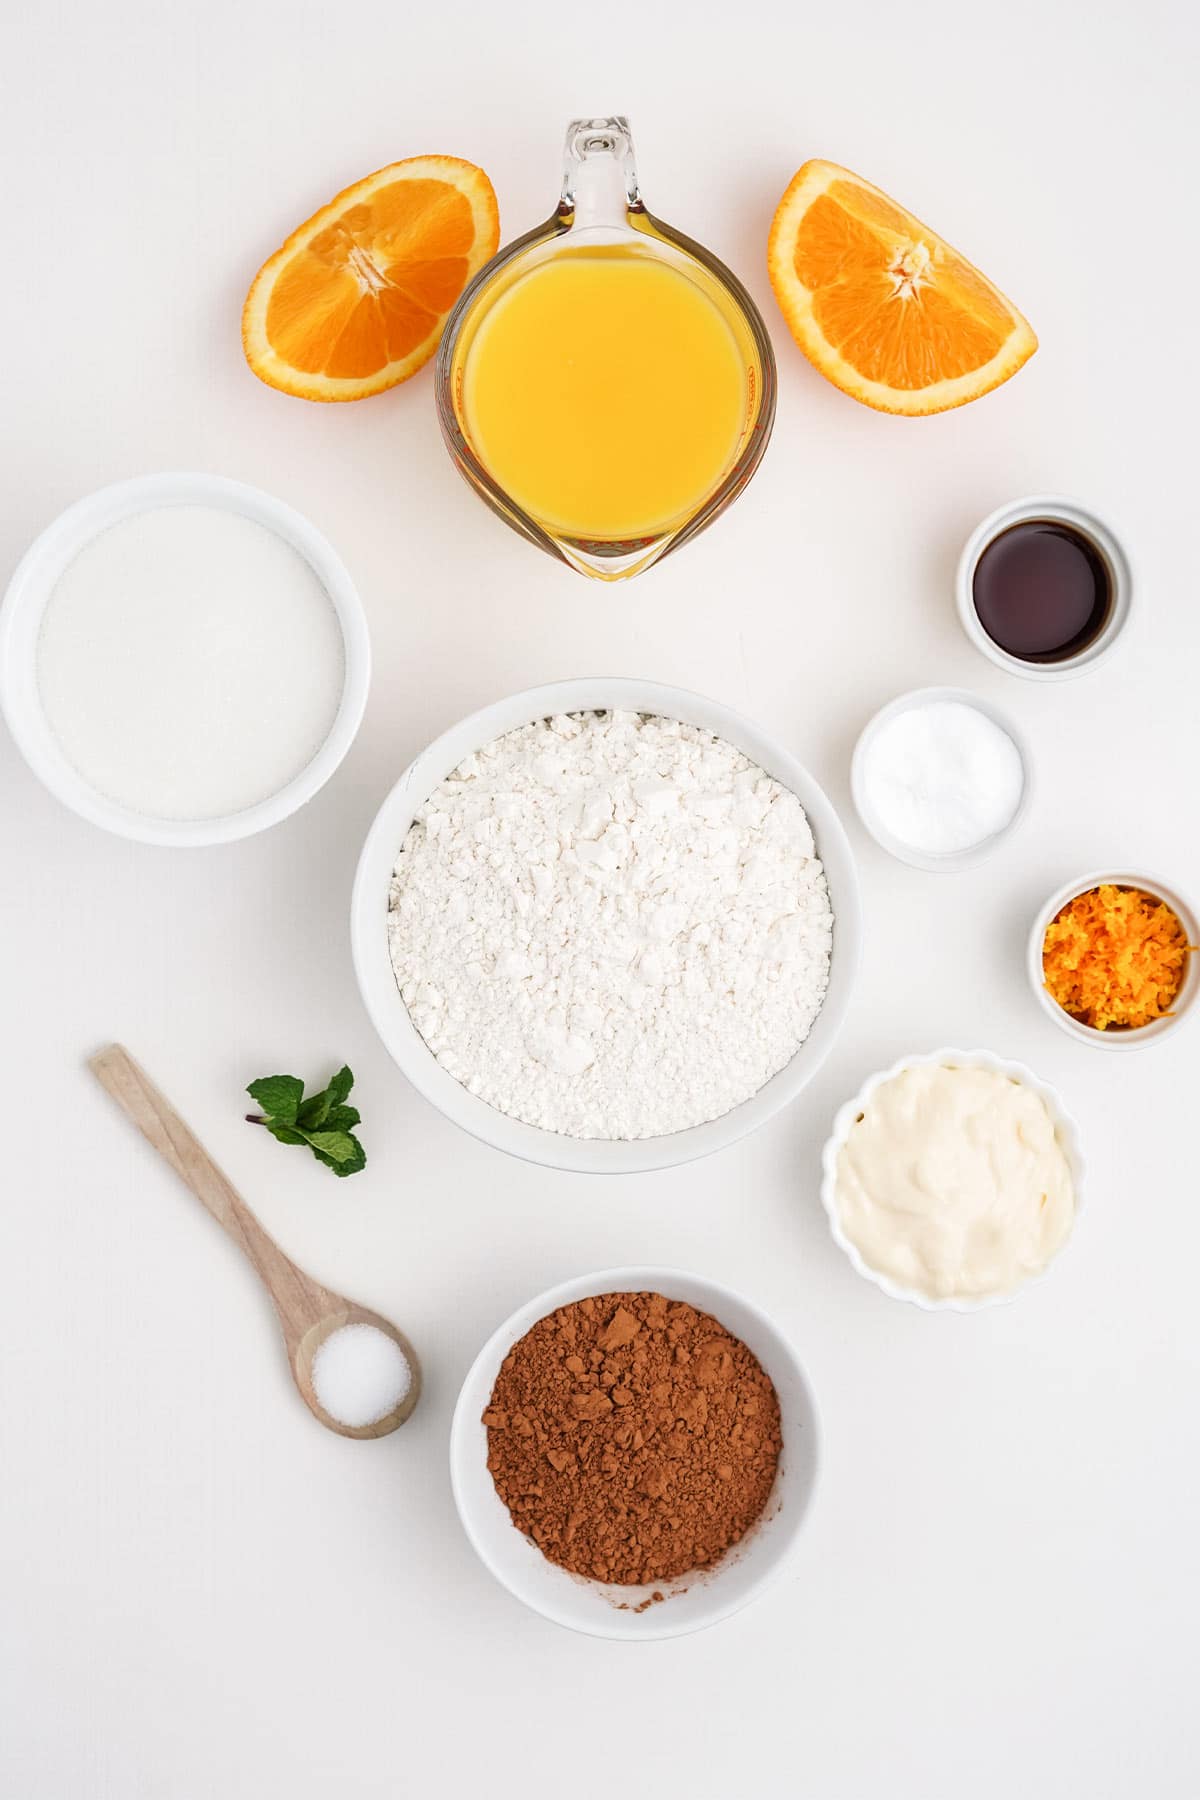 Ingredients to make chocolate orange bundt cake on the table.